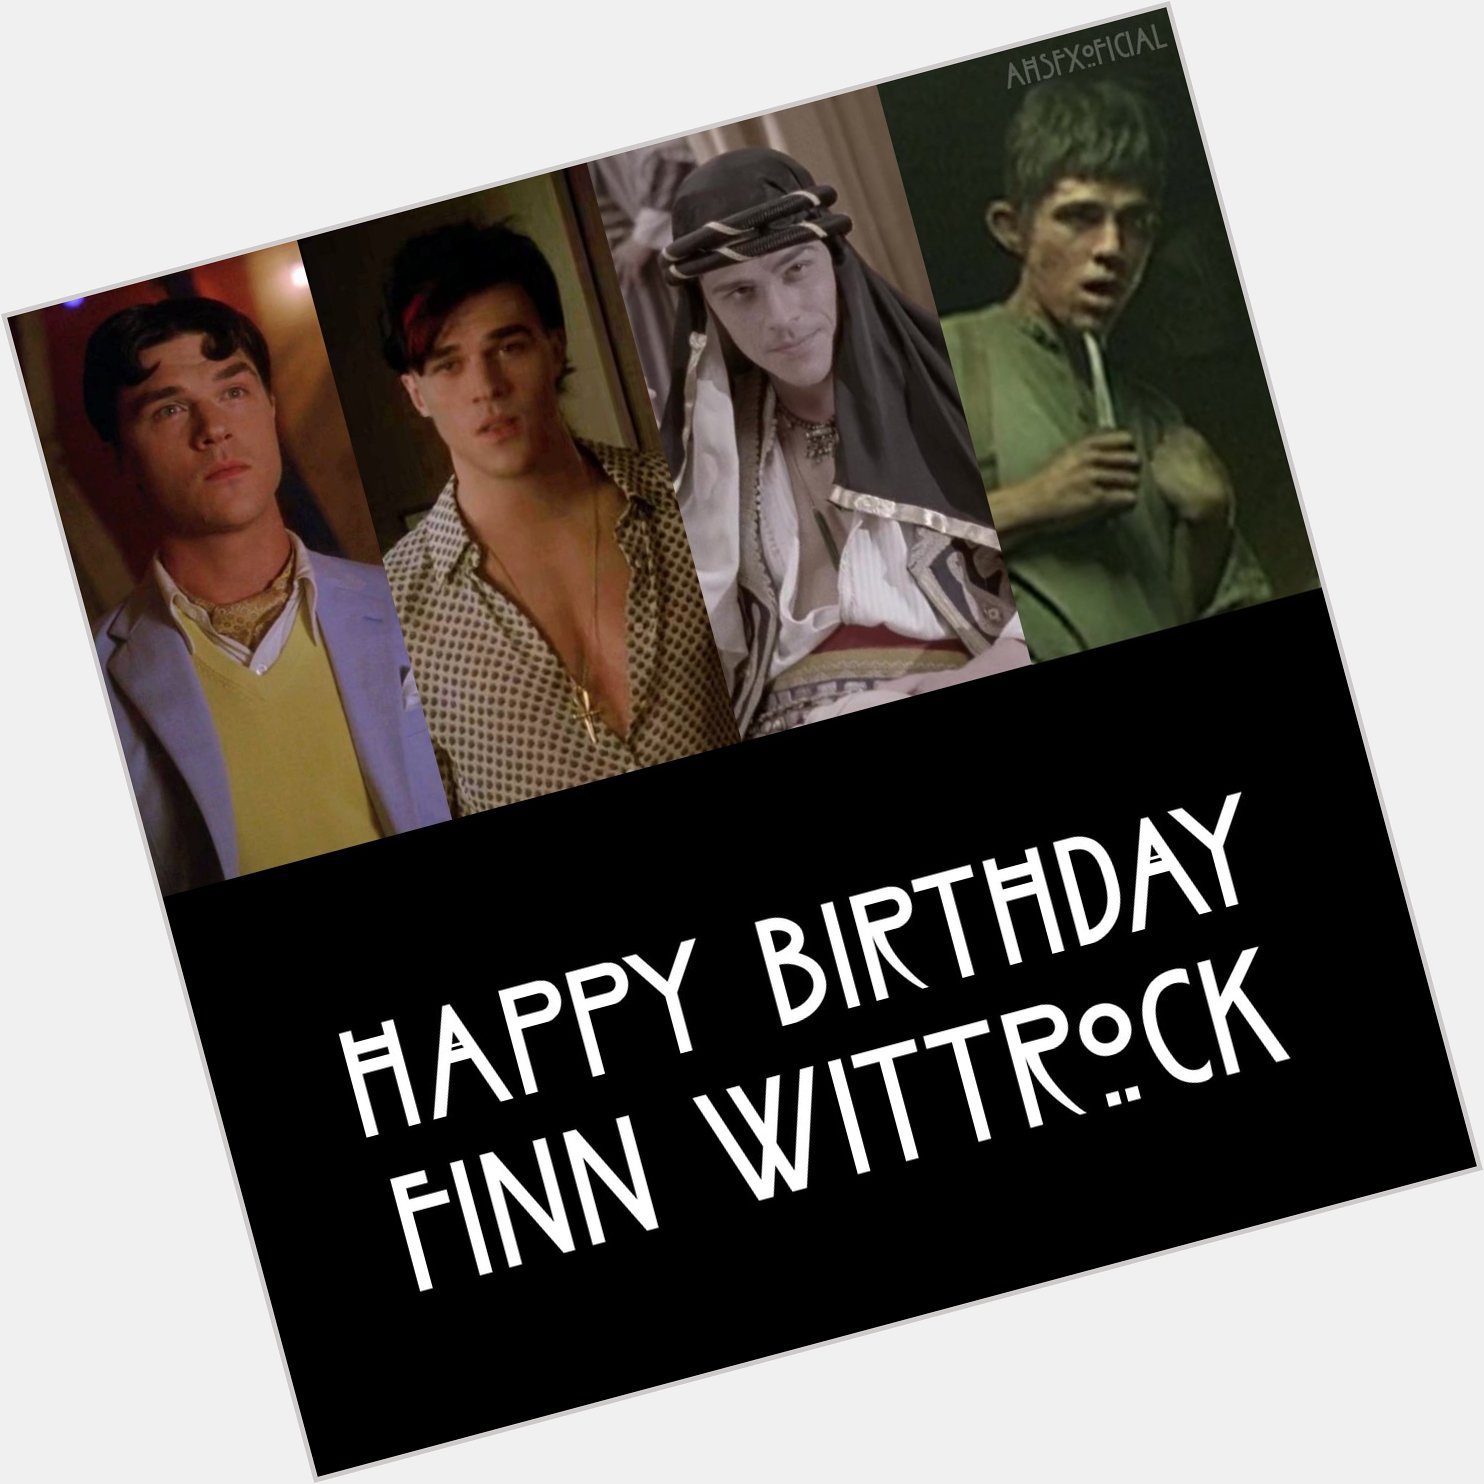 Finn Wittrock está completando 35 anos hoje!
Happy Birthday Finn  Qual seu personagem favorito? 